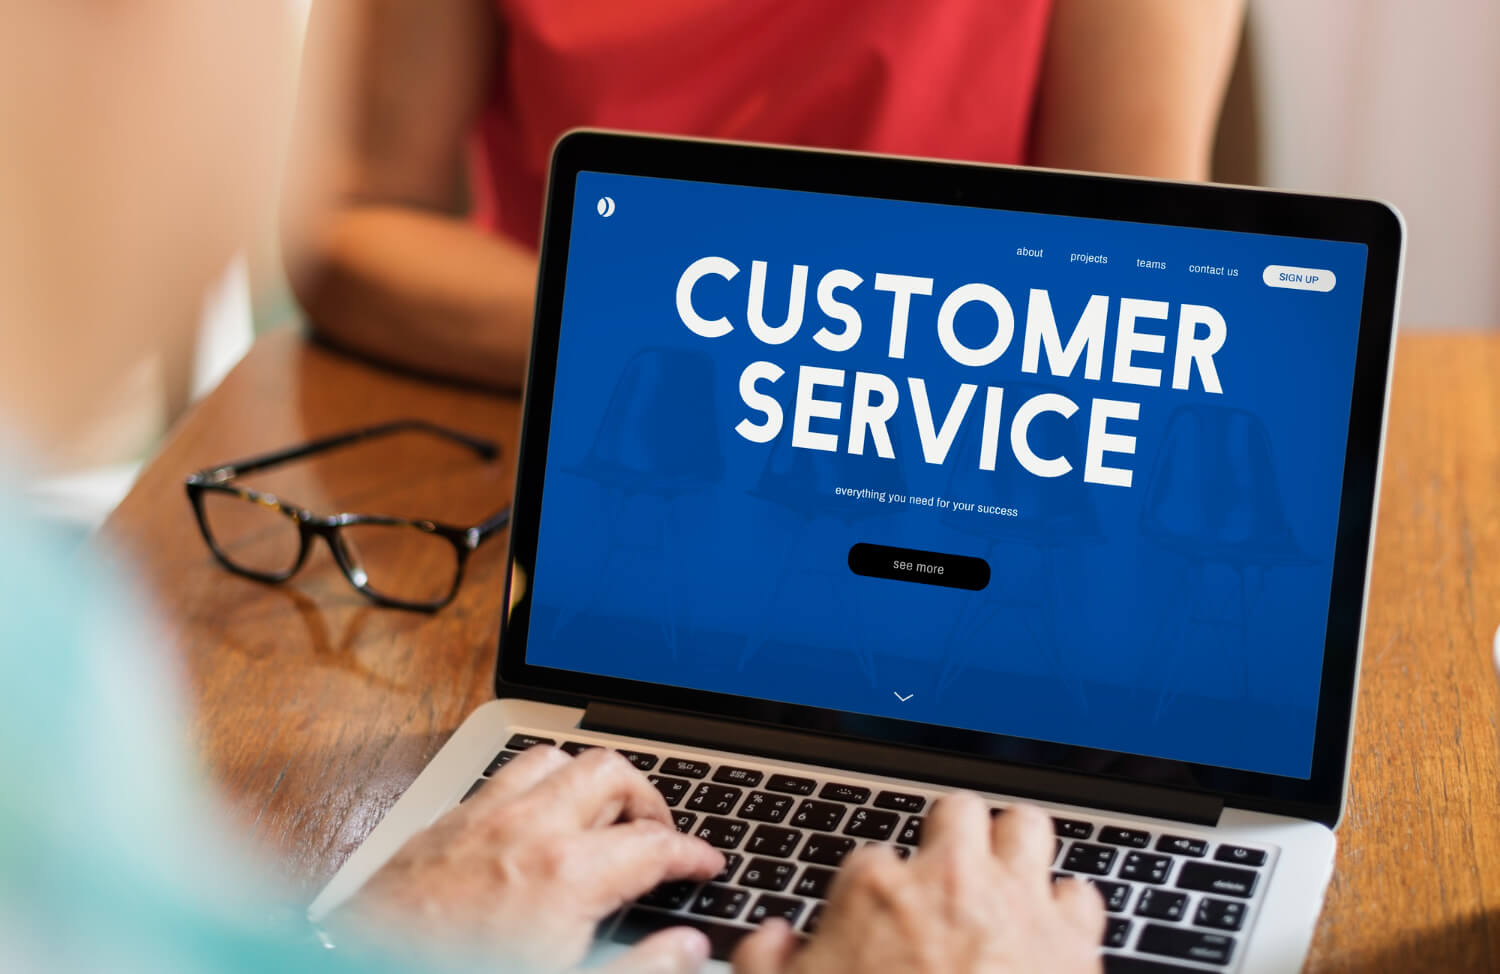 Customer care service webpage interface